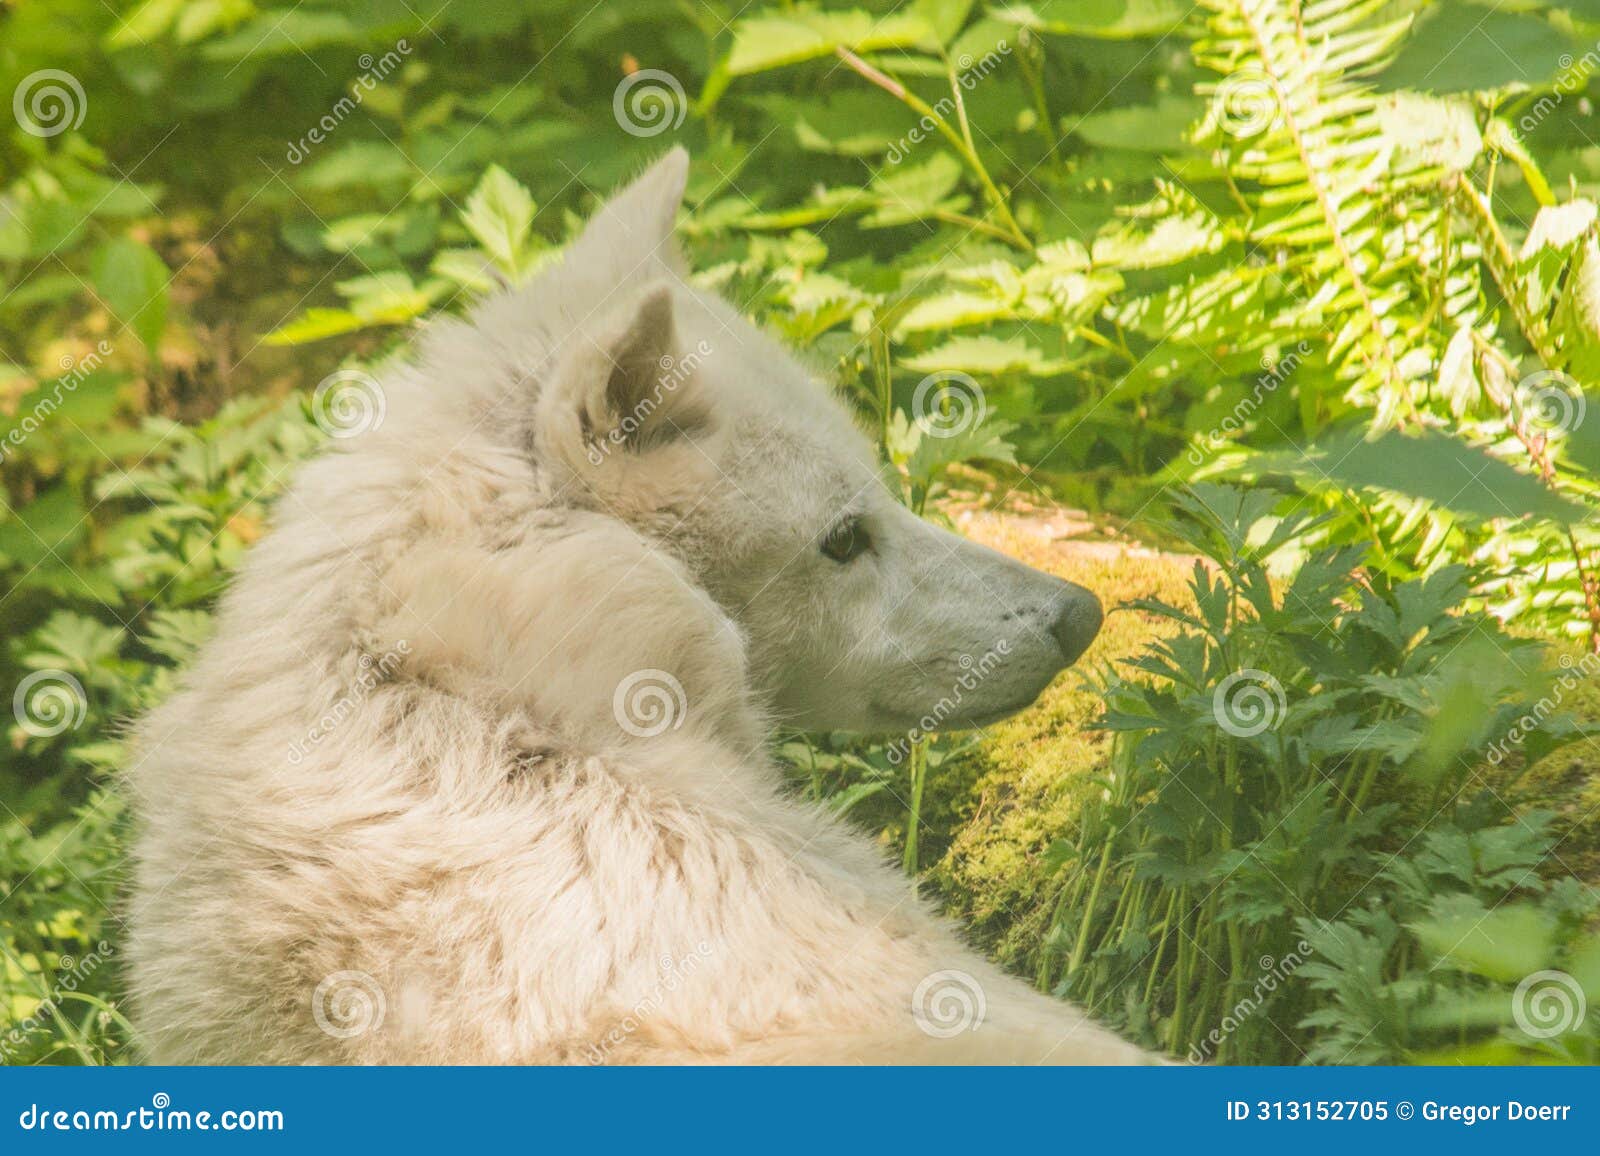 gray wolf canis lupus awaking